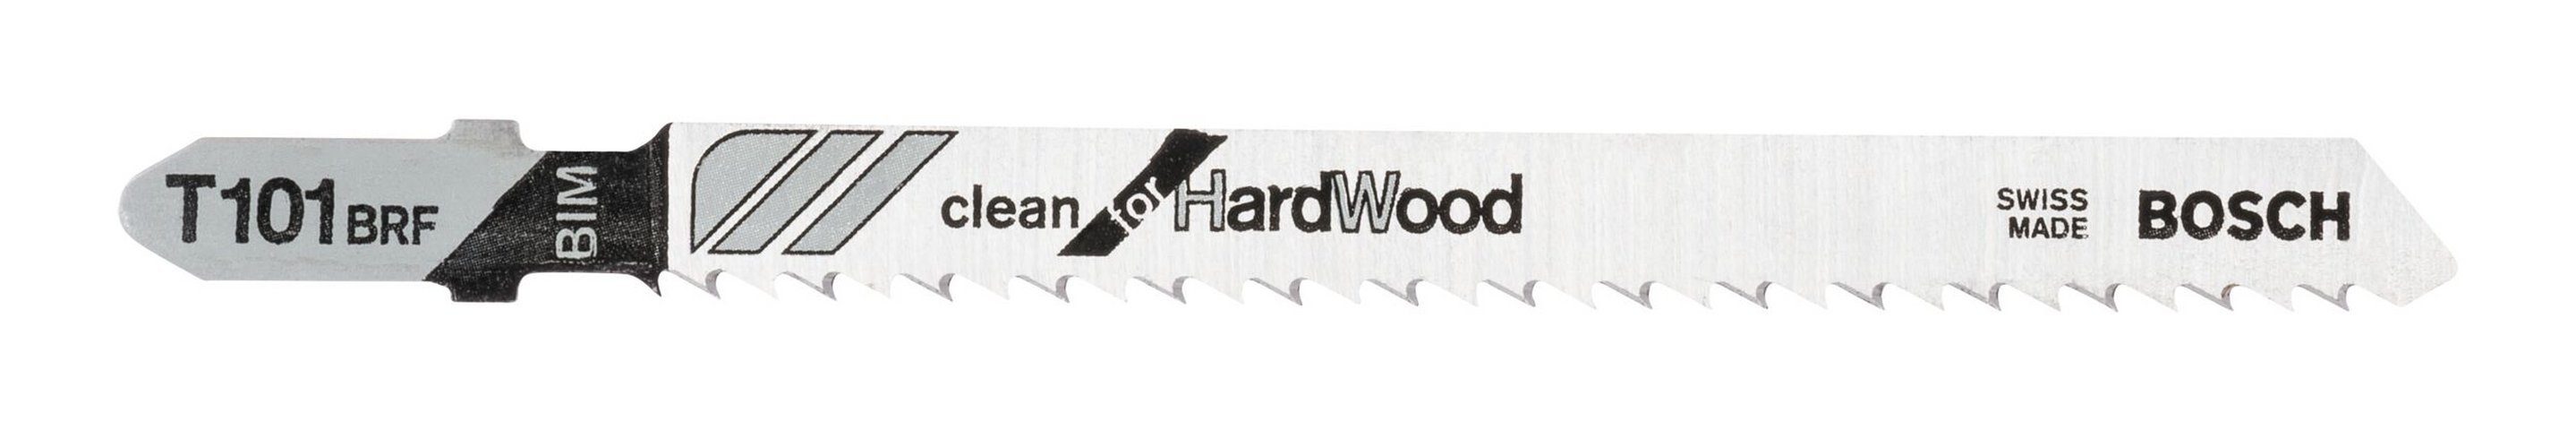 BOSCH Stichsägeblatt (25 Stück), T 101 BRF Clean for Hard Wood - 25er-Pack | Stichsägeblätter